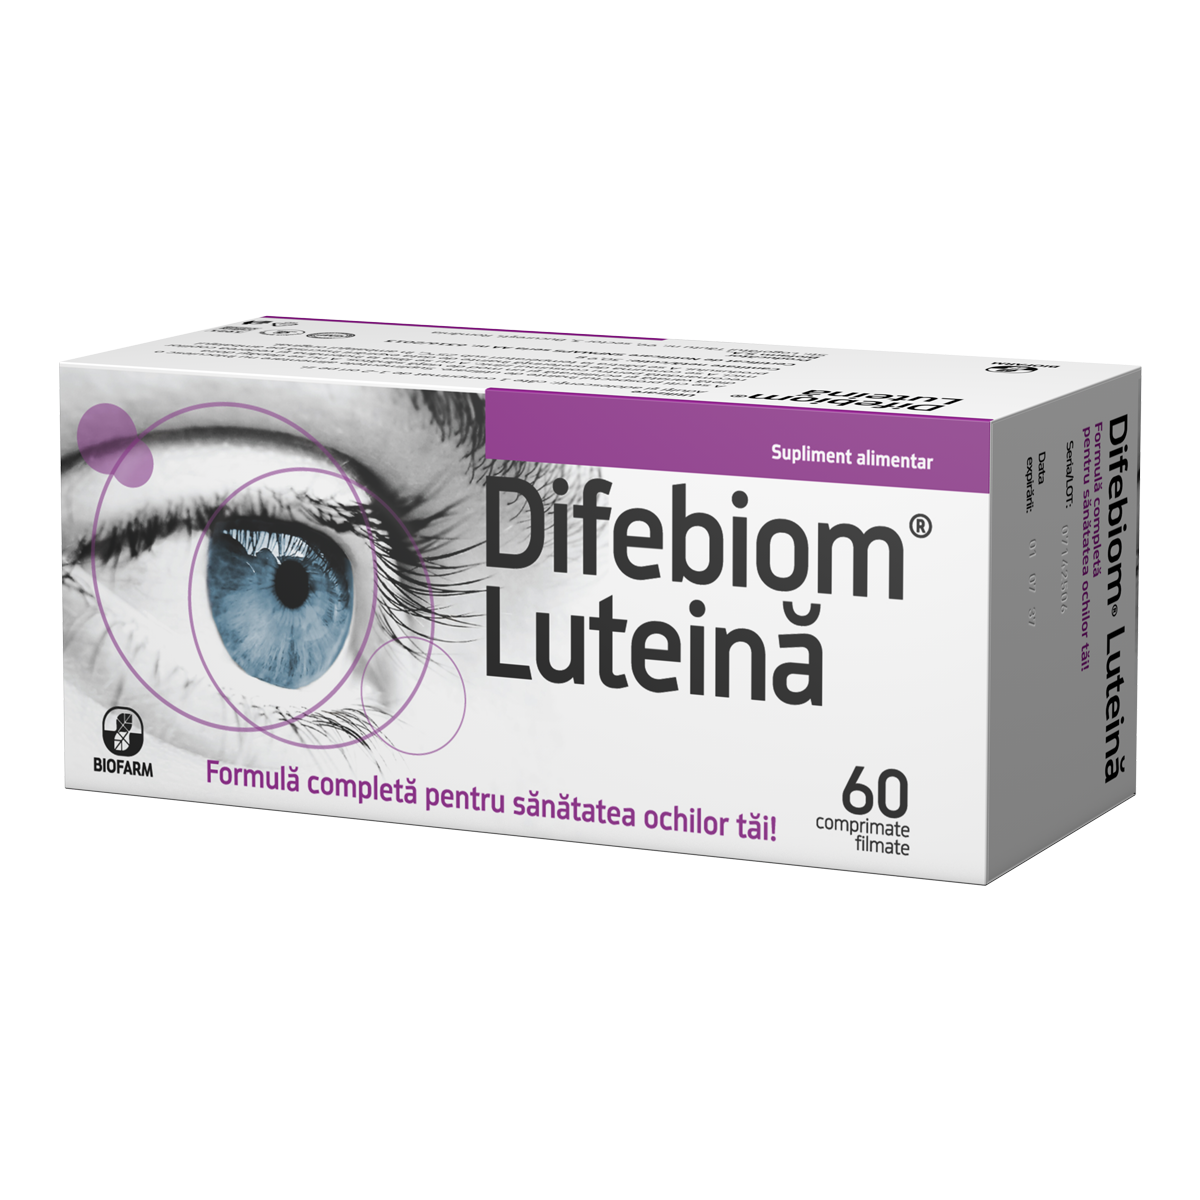 OFTAMOLOGIE - Difebiom Luteină, 60 comprimate, Biofarm, sinapis.ro